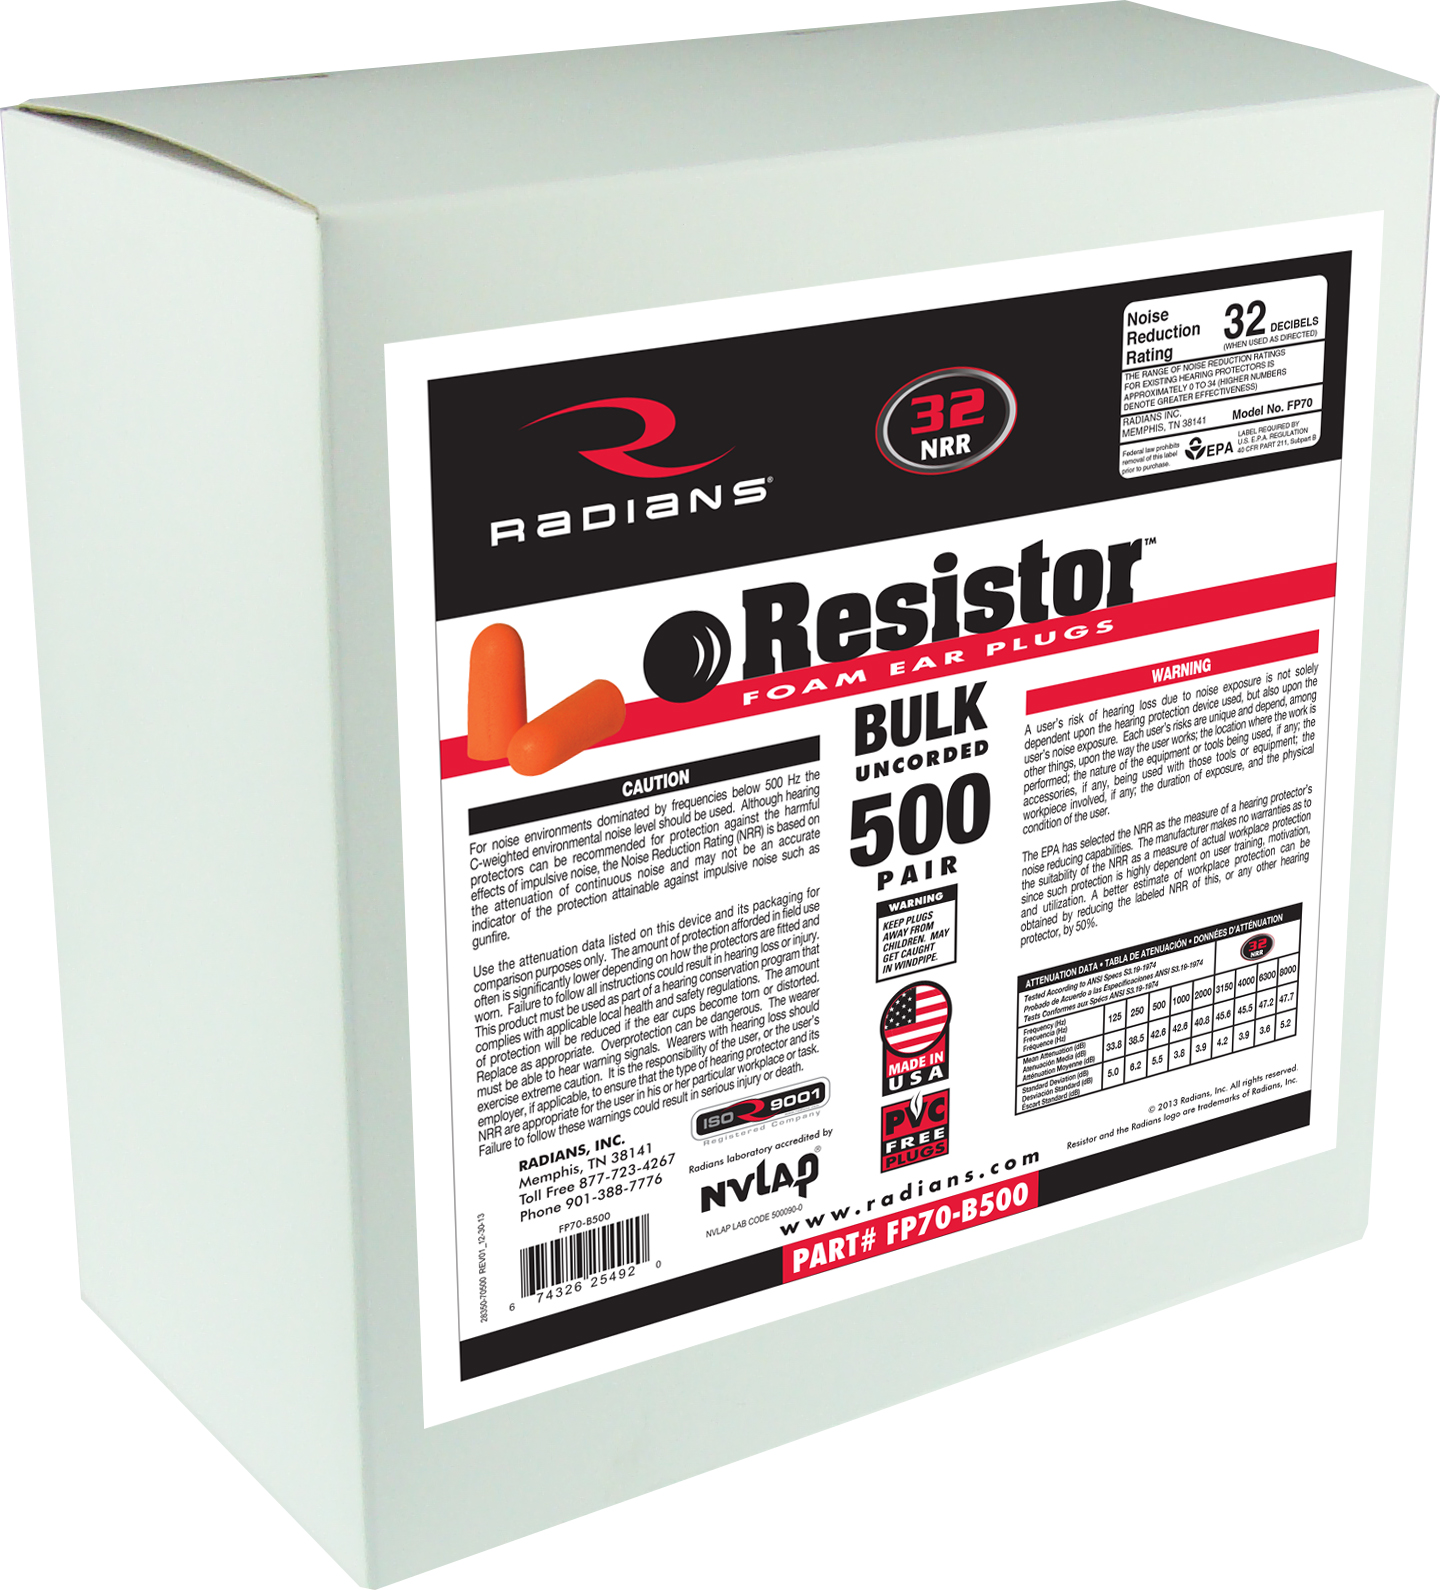 Resistor® 32 Foam Uncorded Earplug Dispenser Refill - 500 Pair - Uncorded Earplugs